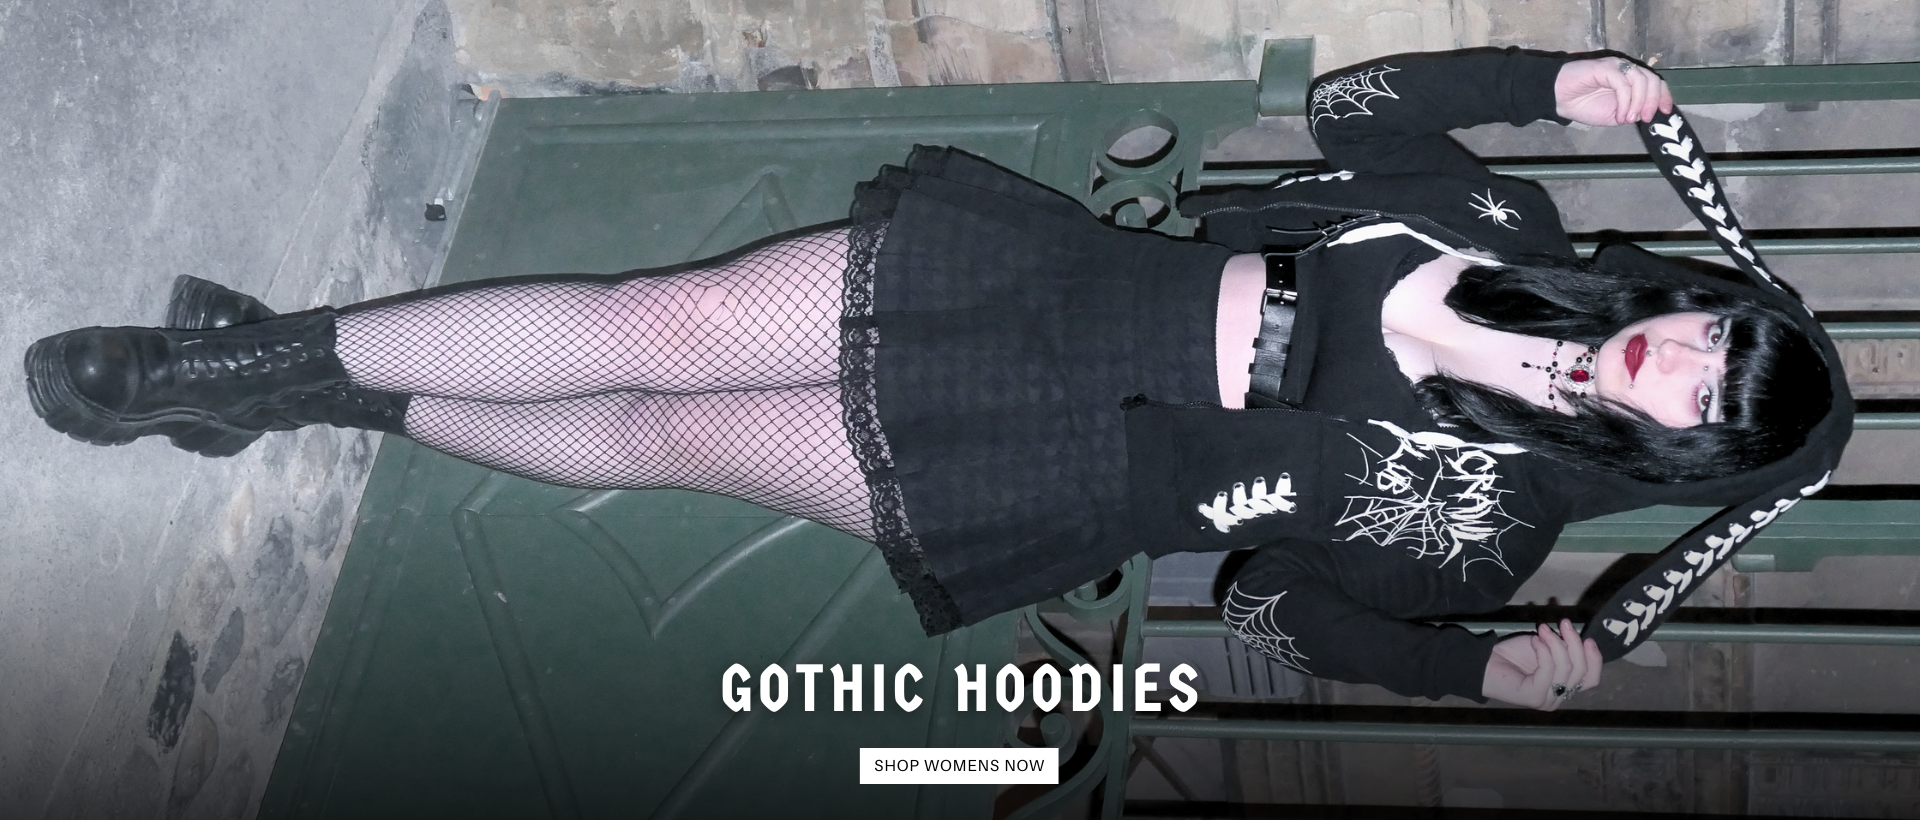 Jawbreaker Gothic Hoodies